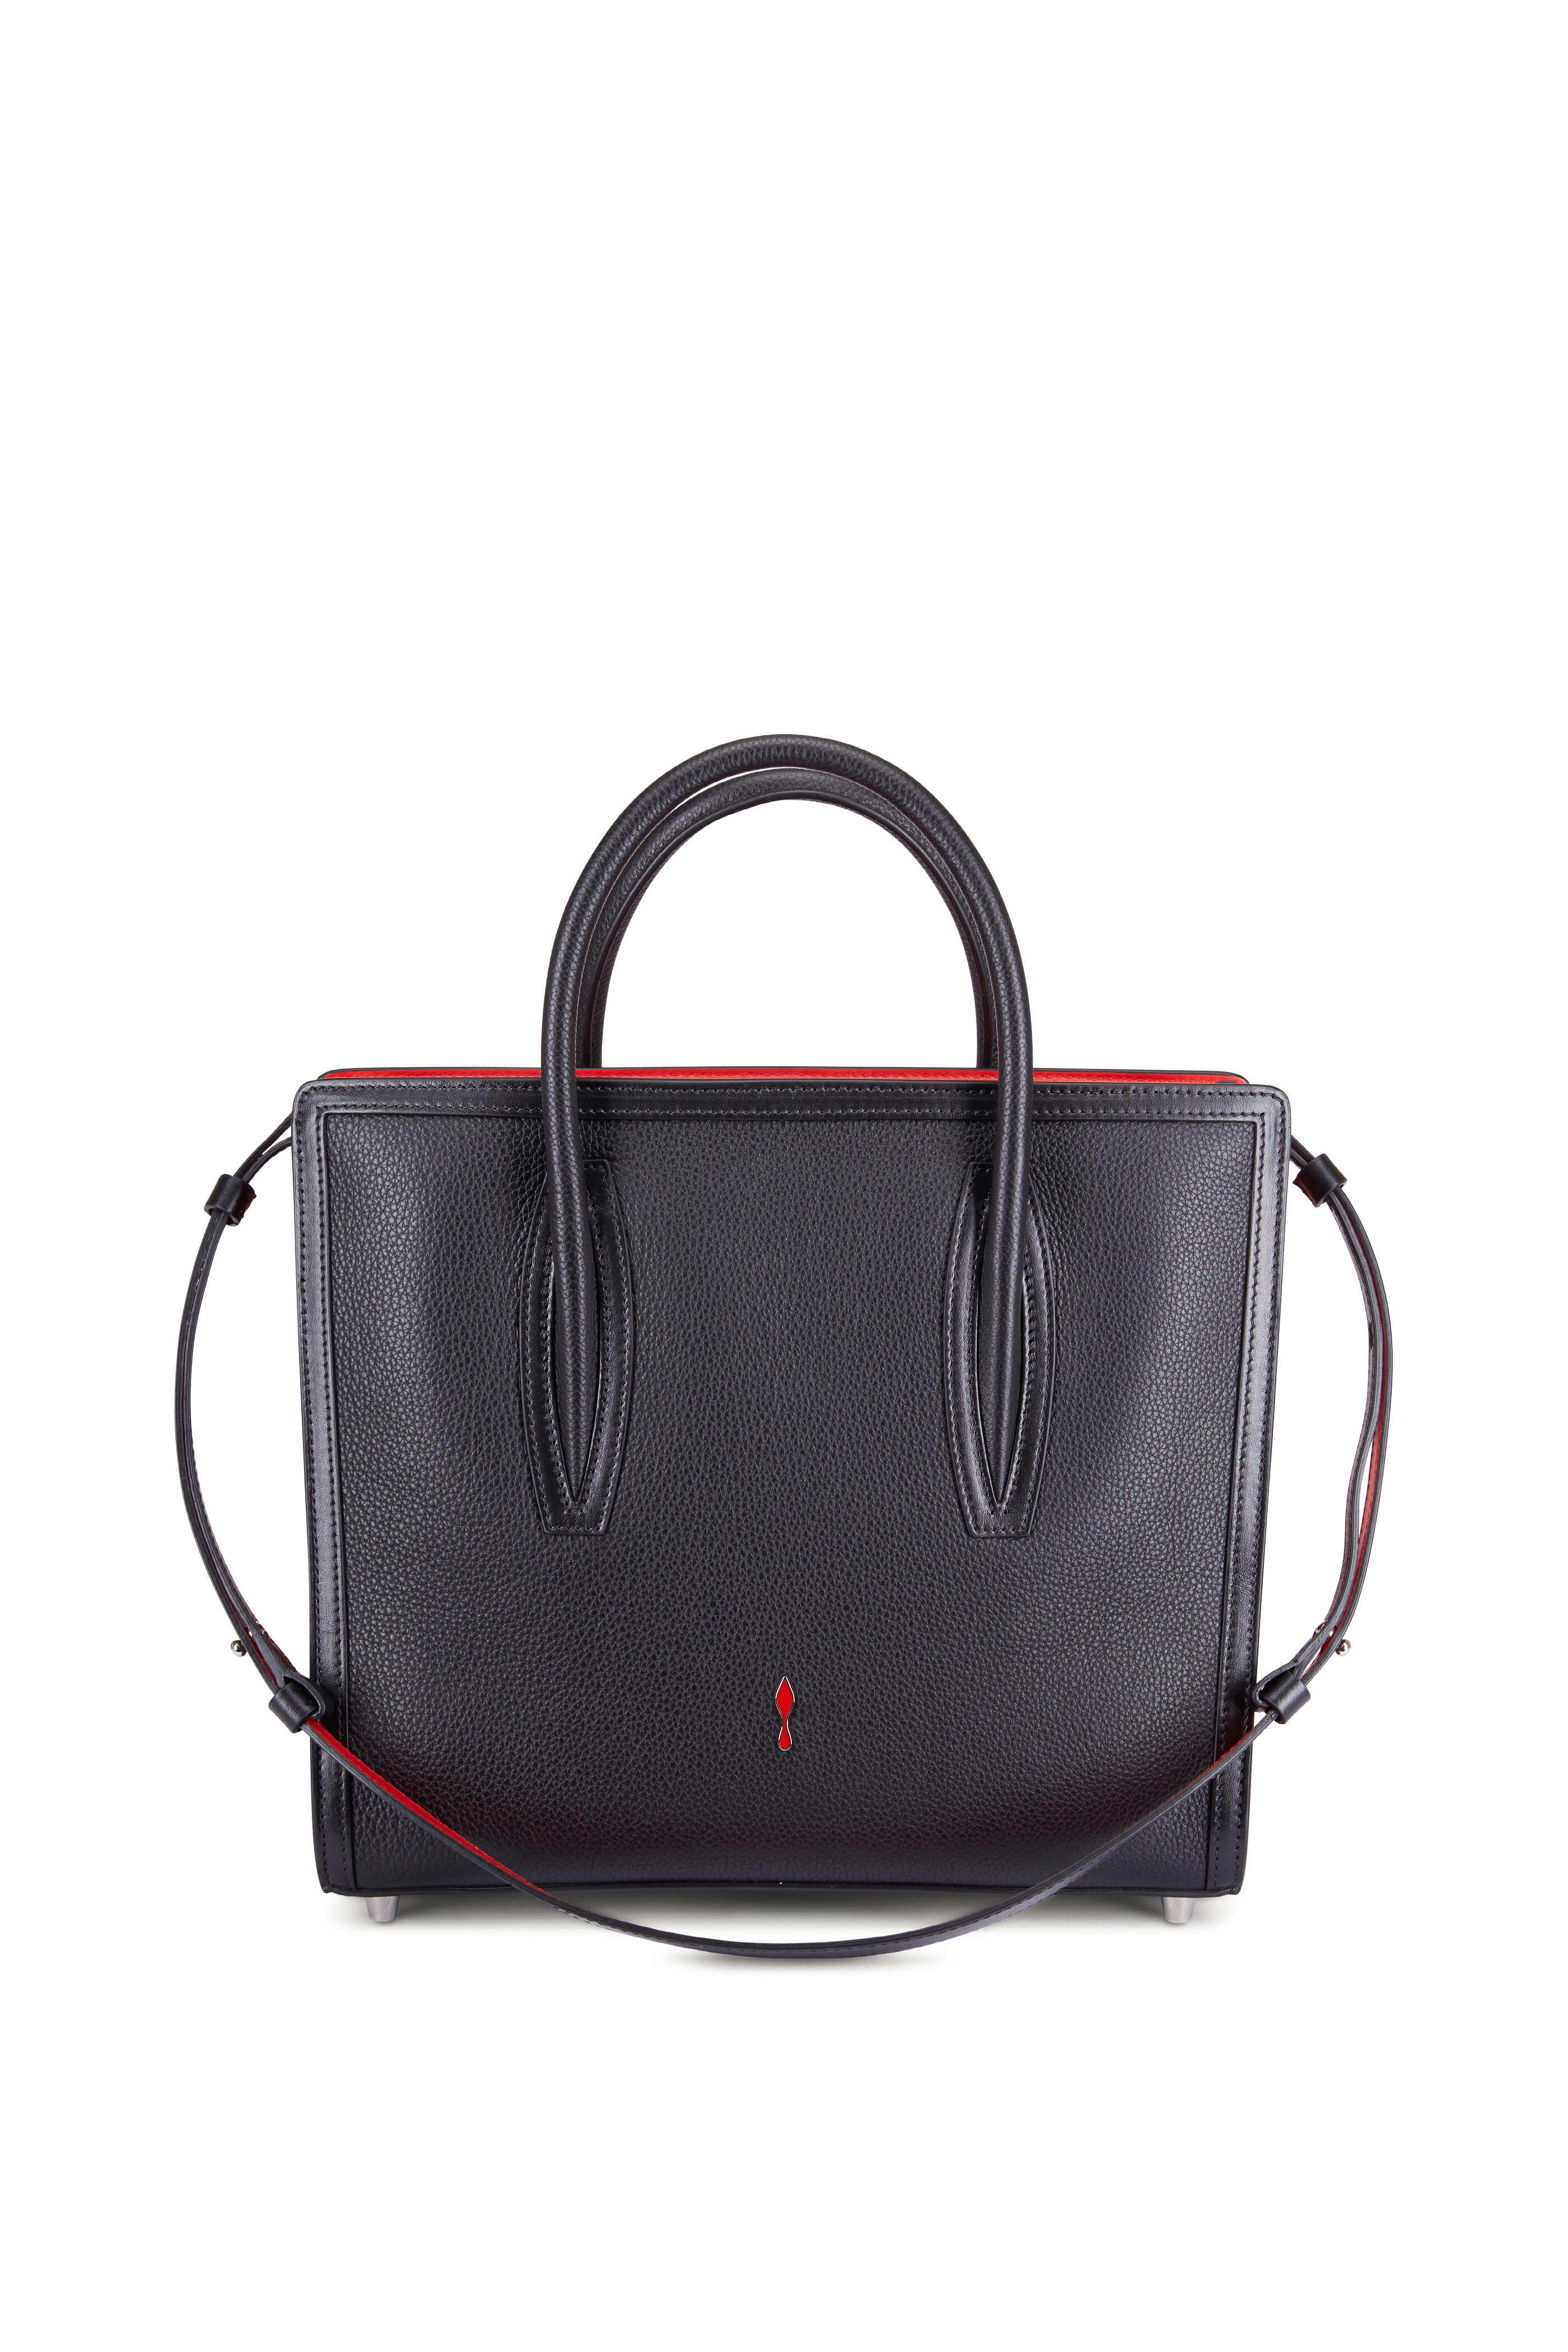 Christian Louboutin, Paloma medium red leather bag